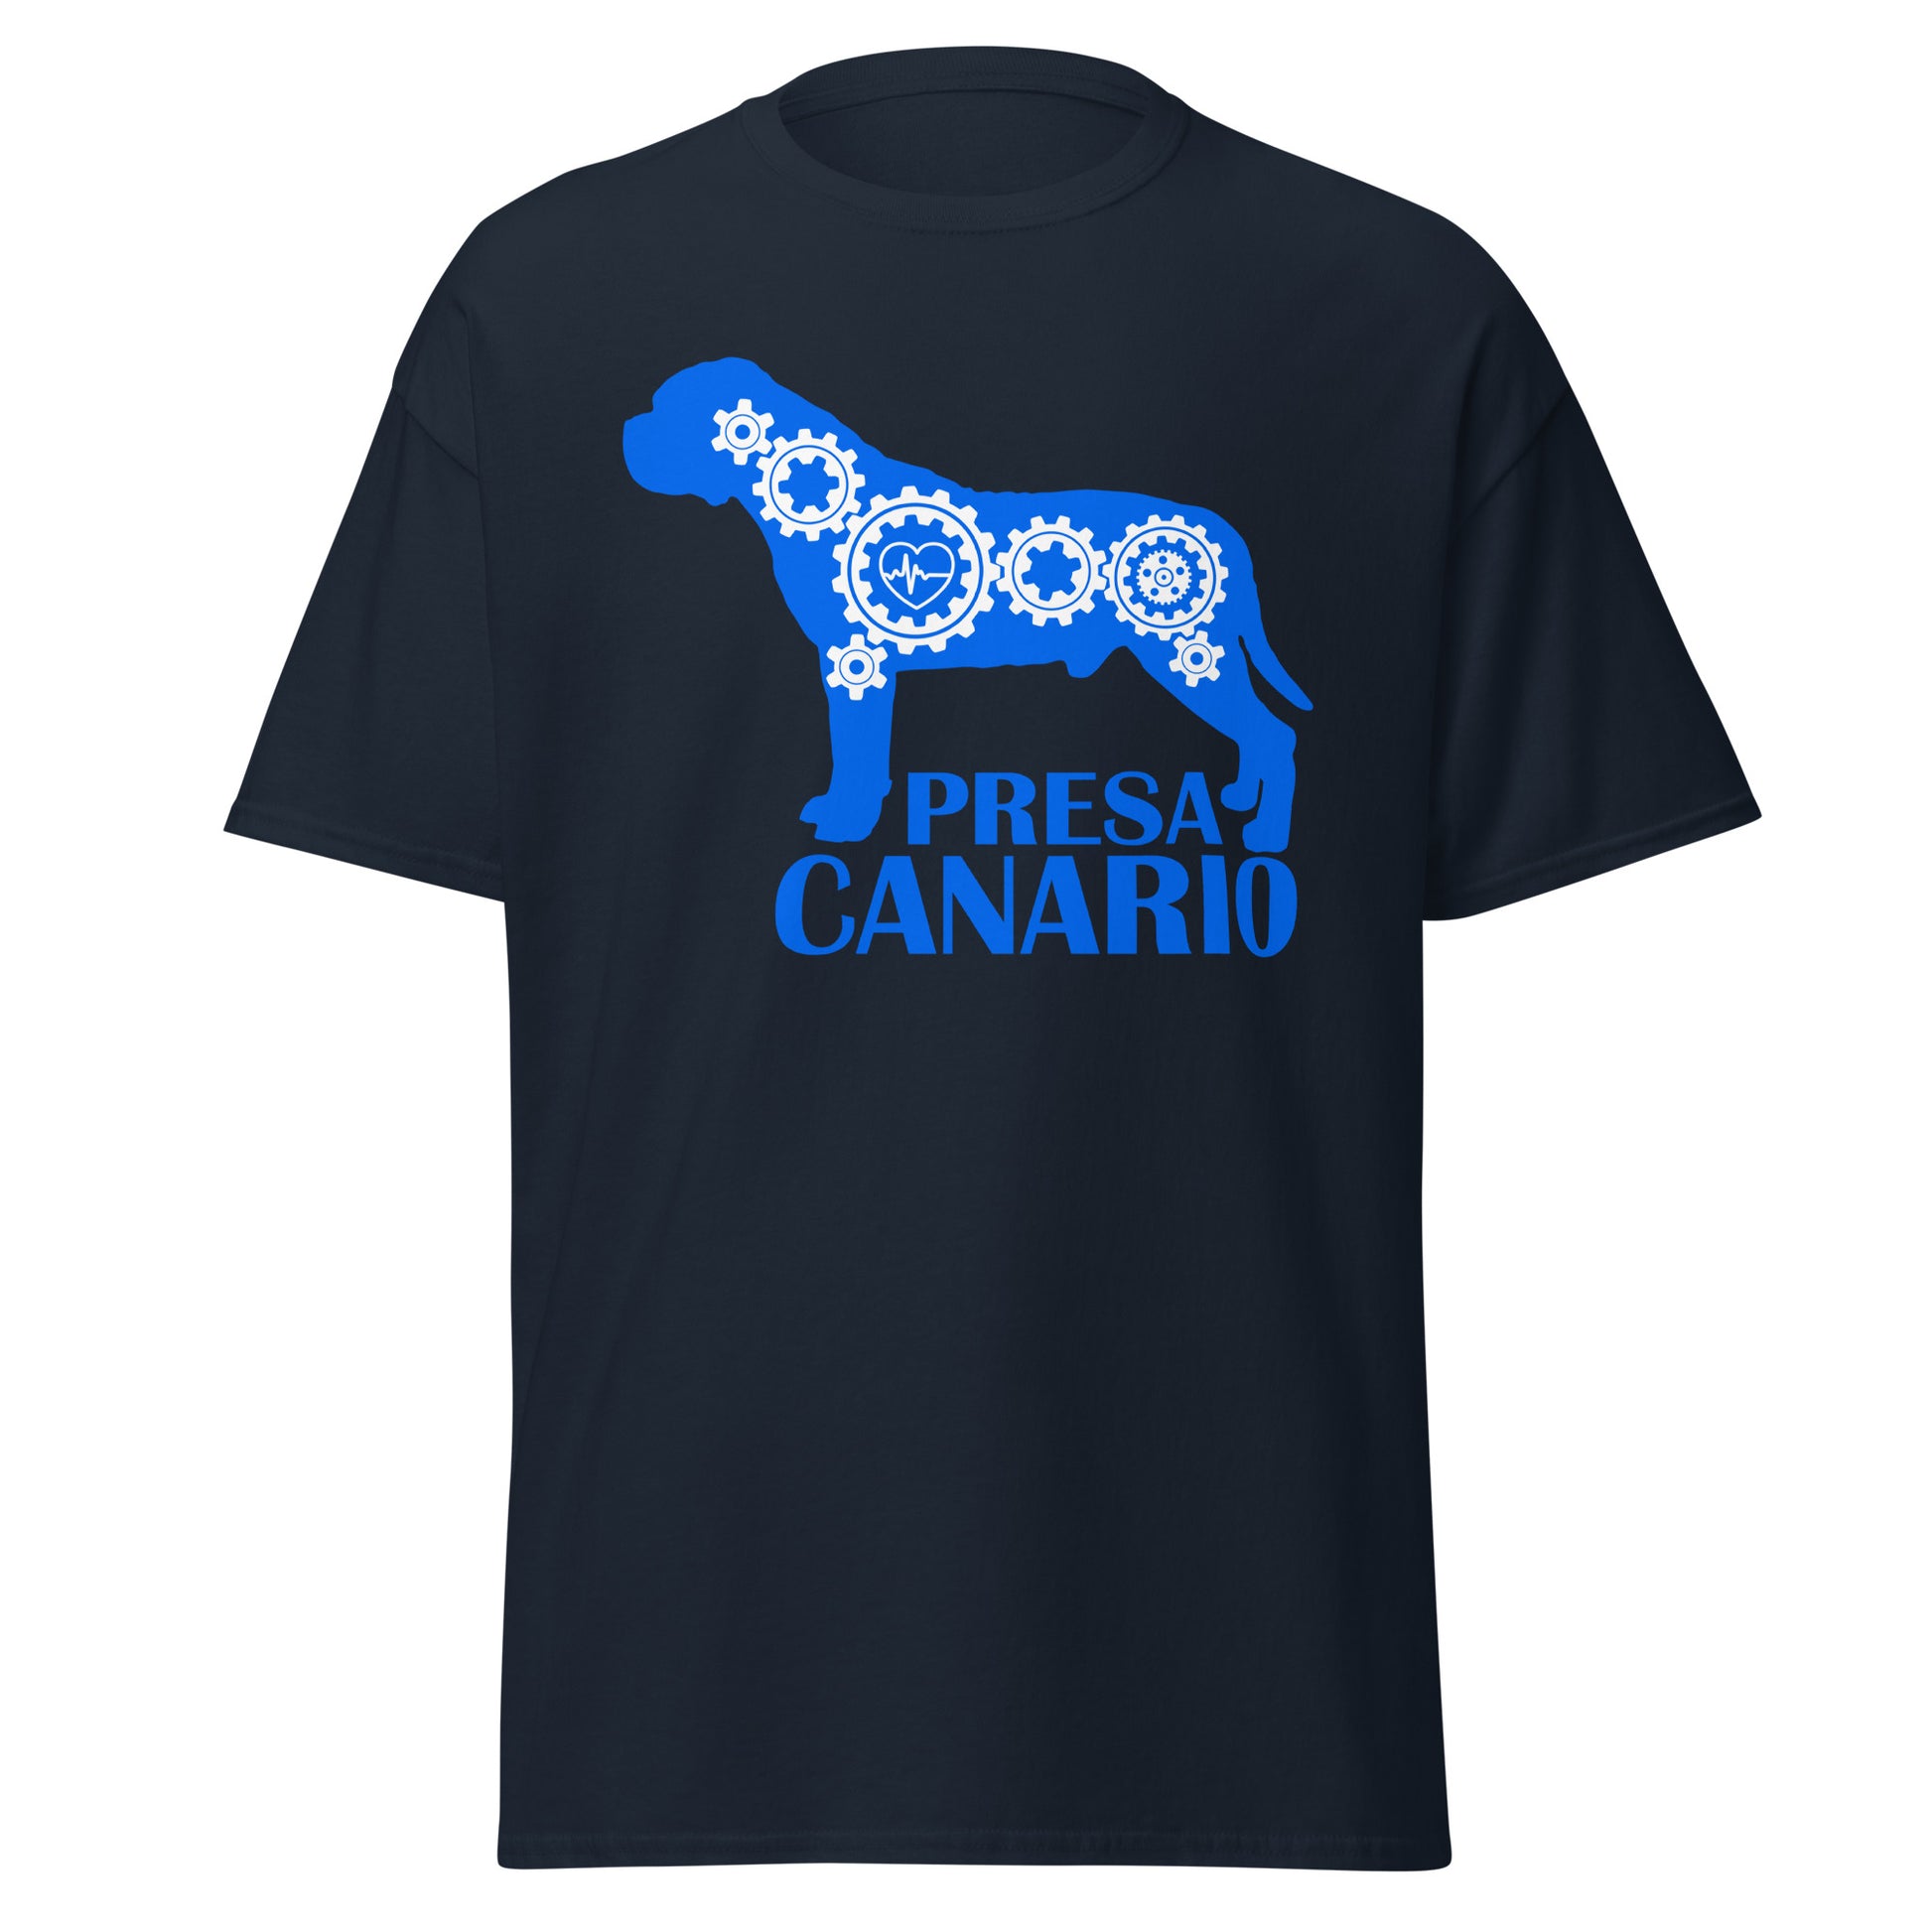 Presa Canario Bionic men’s navy t-shirt by Dog Artistry.